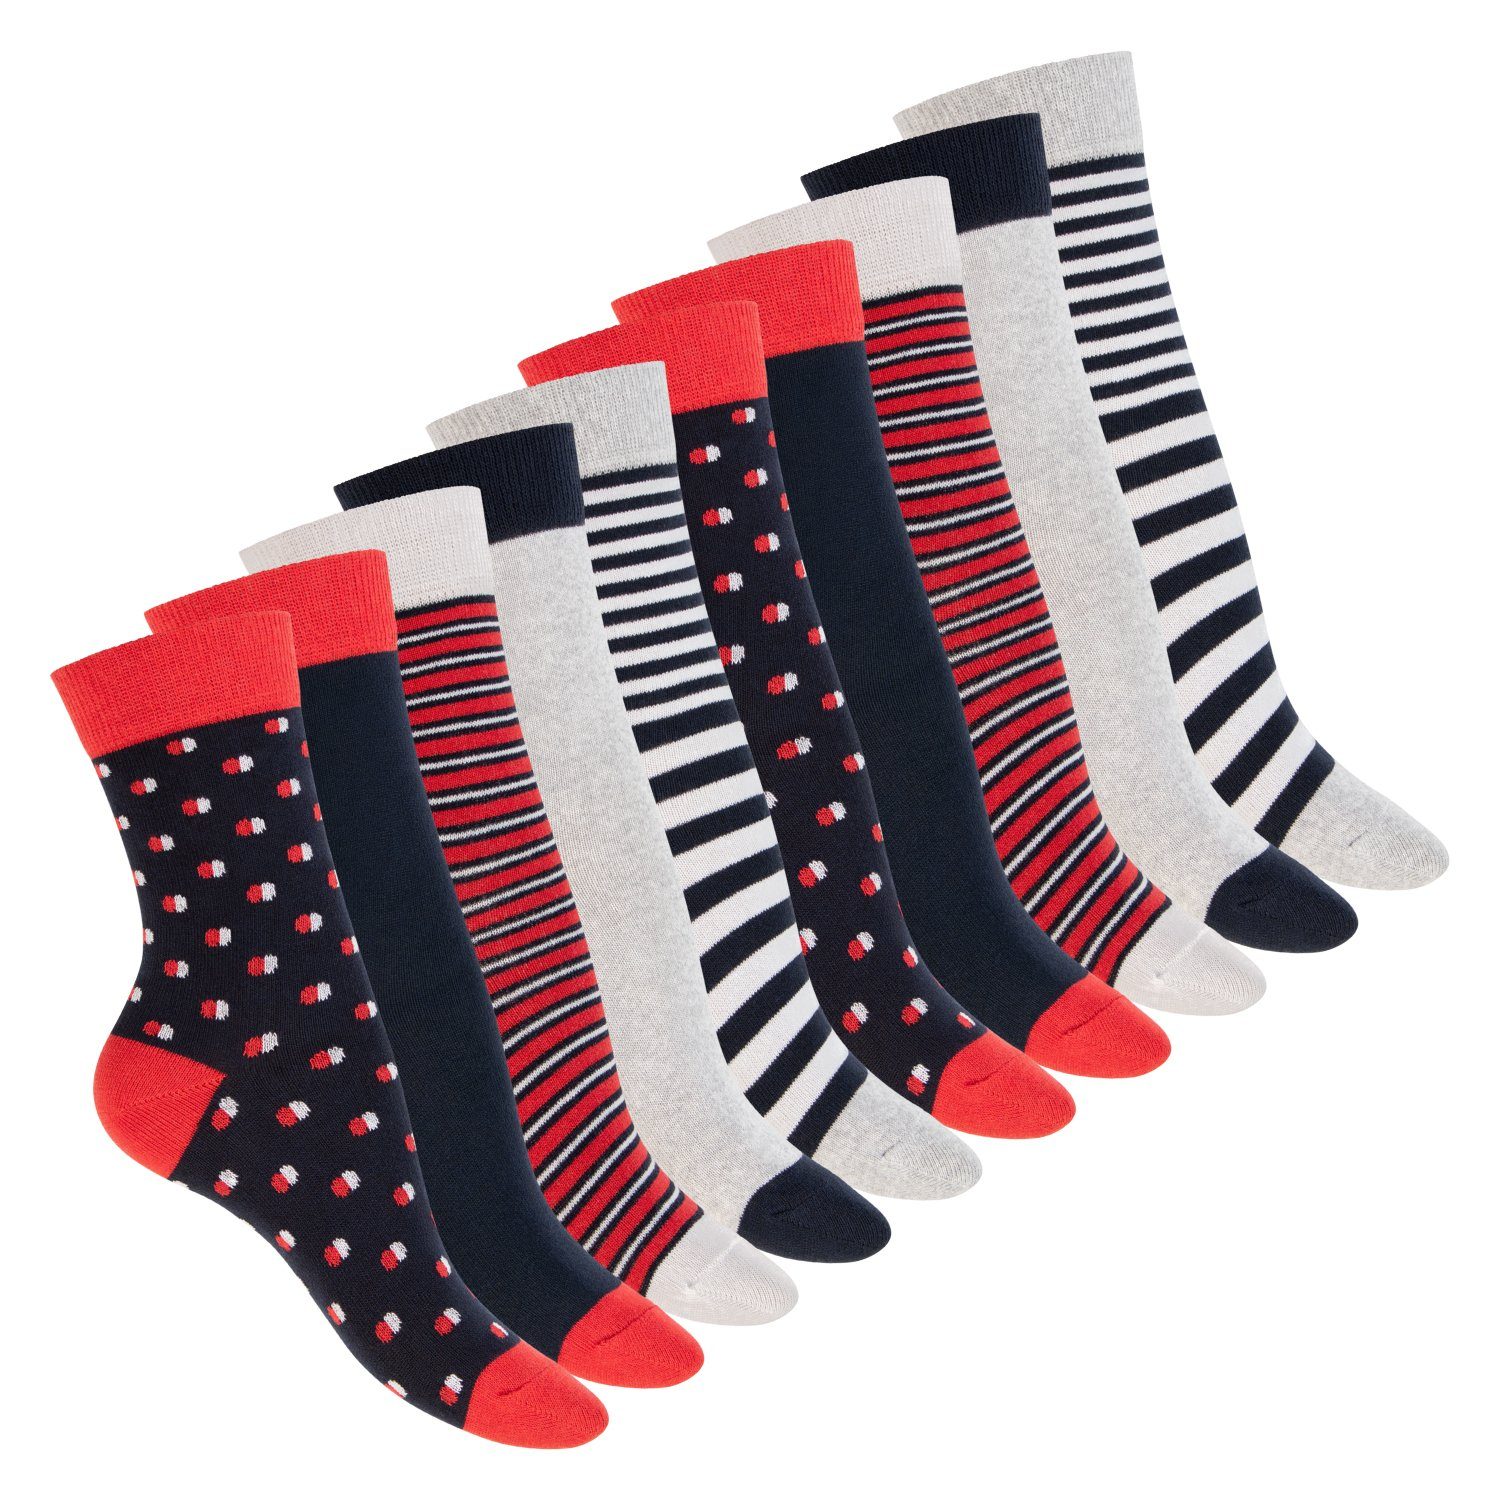 celodoro Basicsocken Damen regenerative Red Motiv Rumba mit Süße Paar), Socken (10 Eco Baumwolle